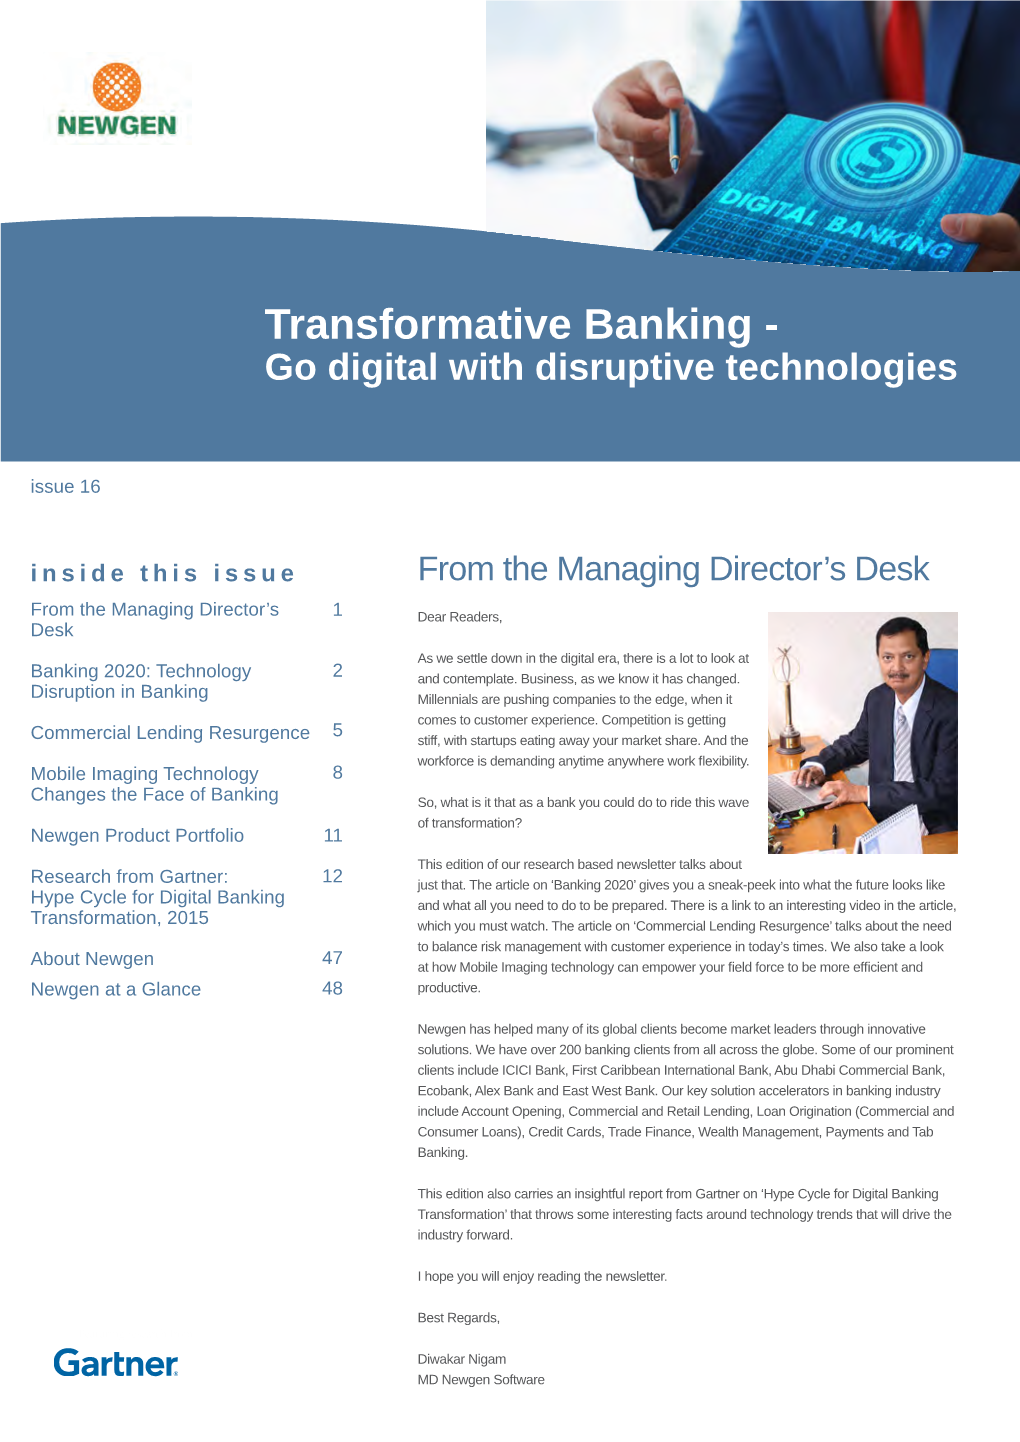 Transformative Banking - Go Digital with Disruptive Technologies